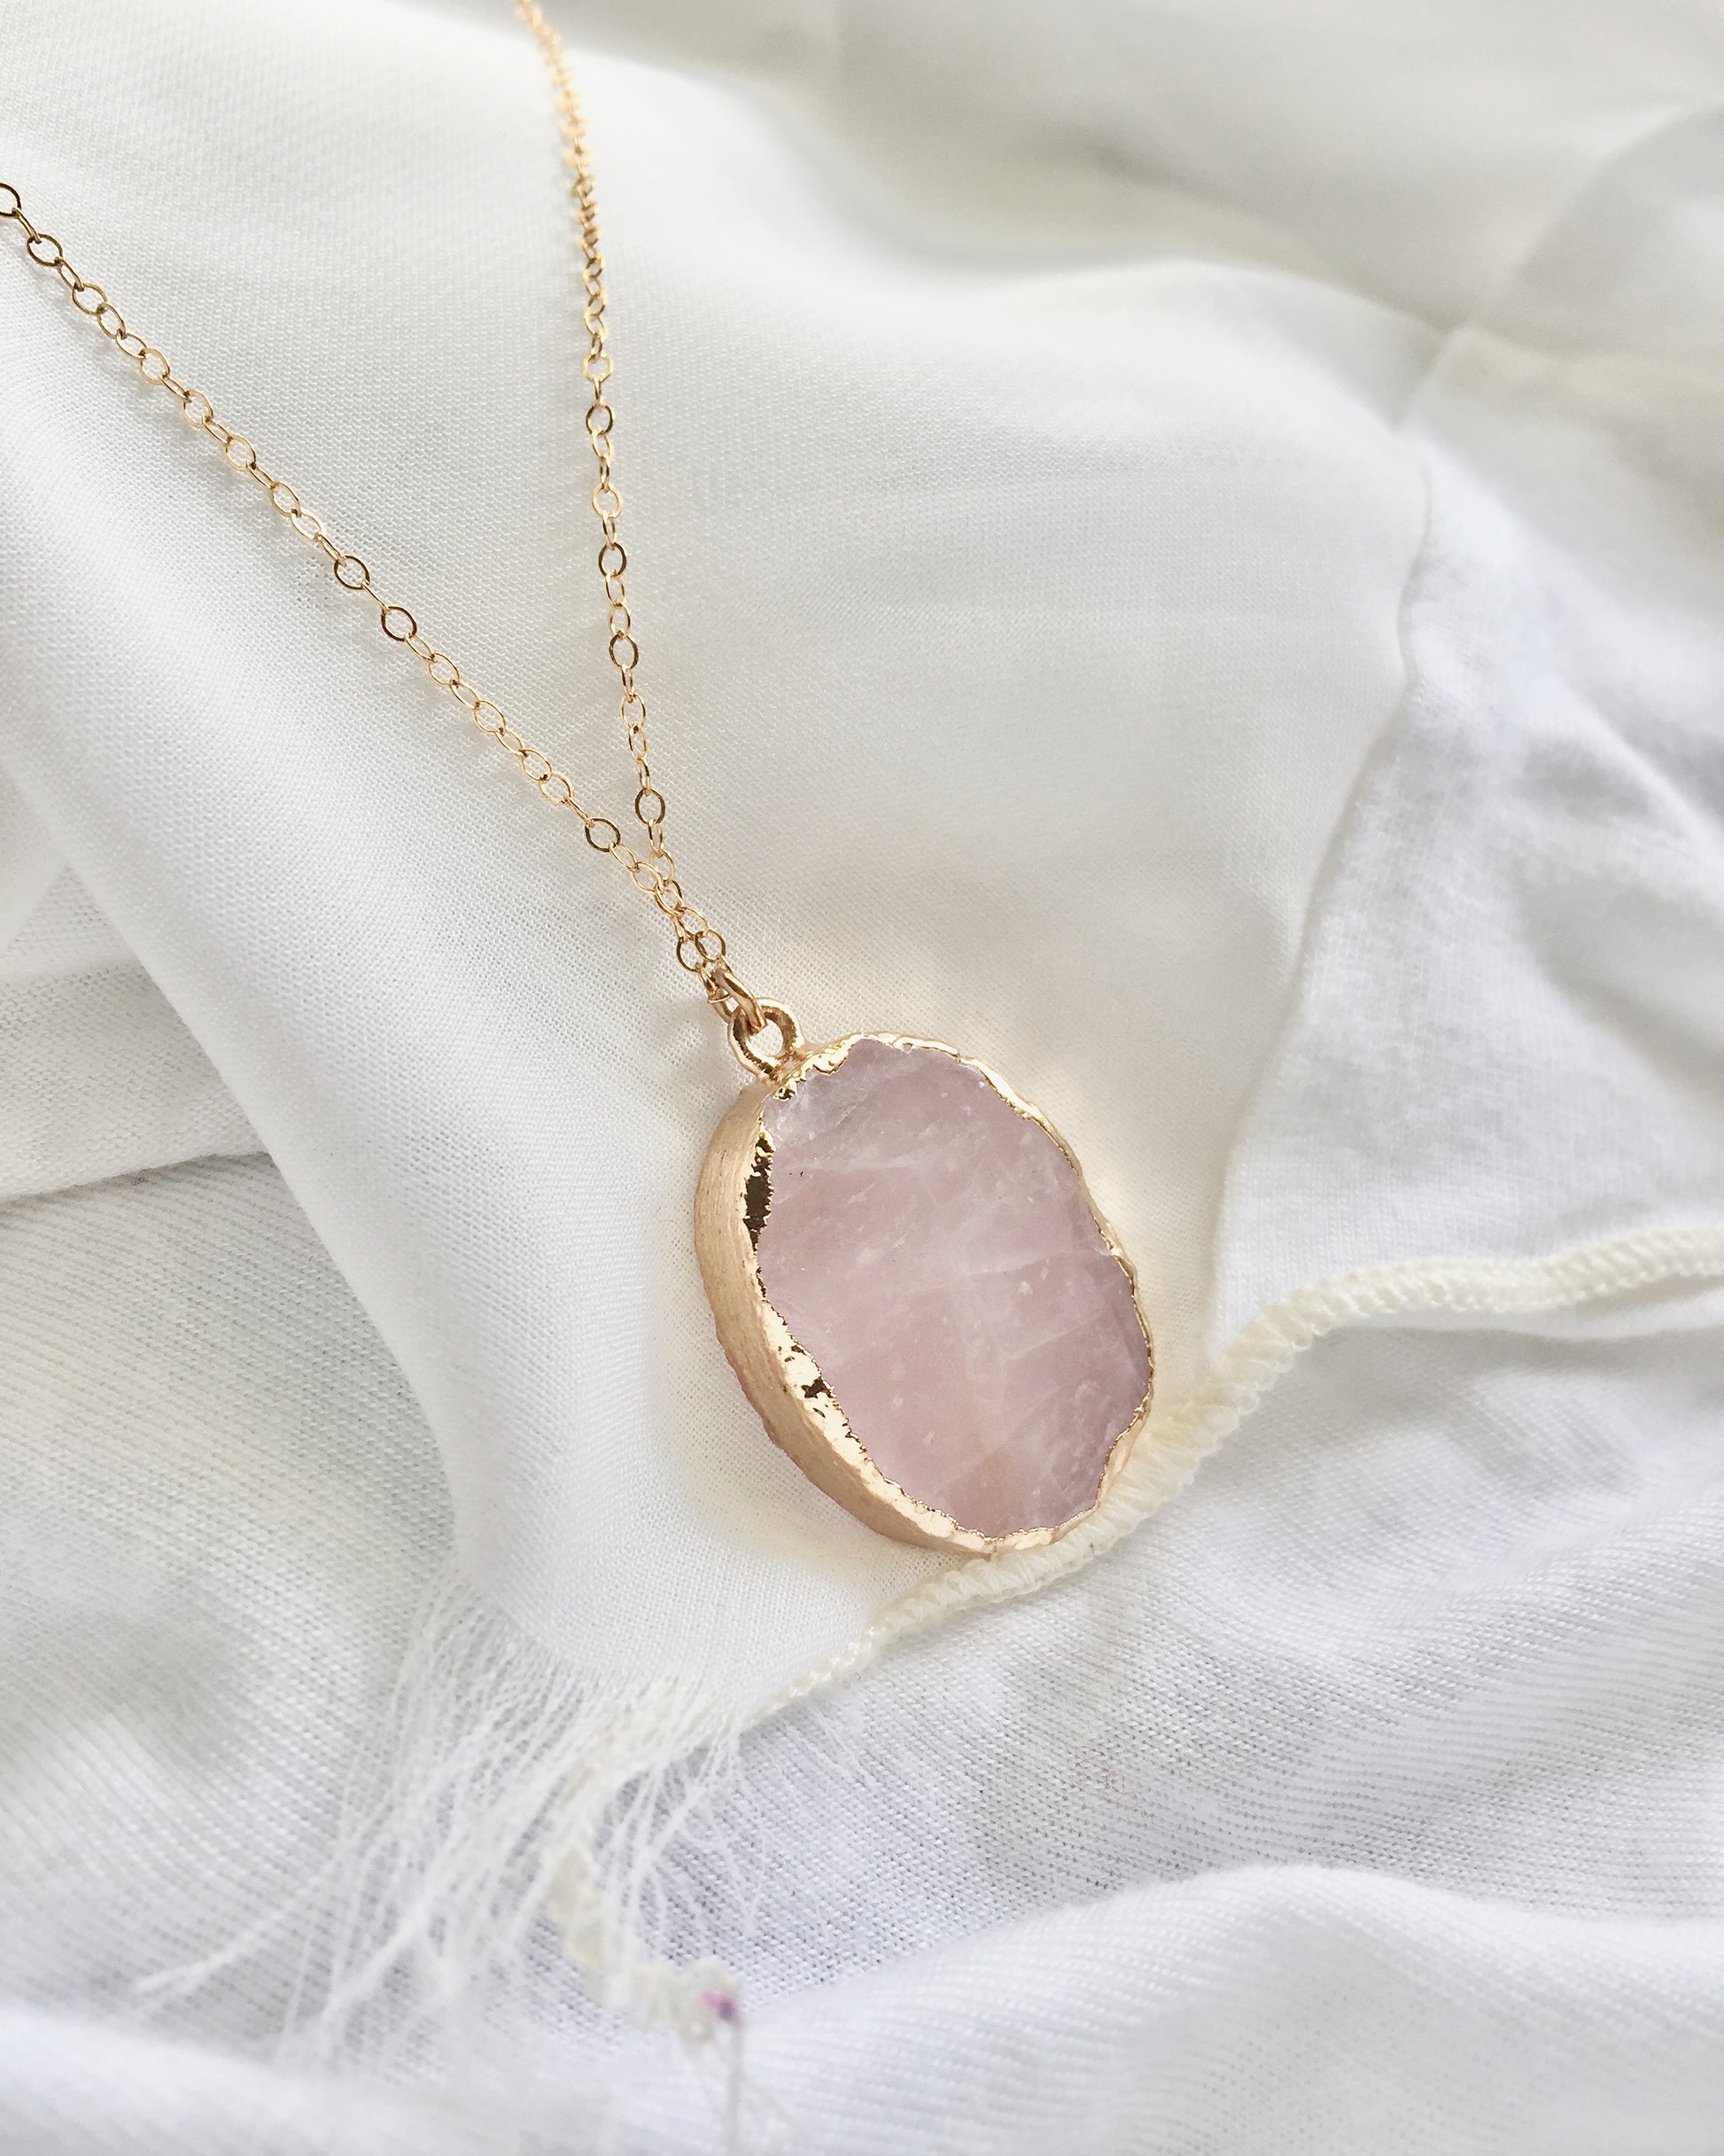 Simple Rose Quartz Necklace | Rose Quartz Pendant Necklace | Delicate Everyday Necklace | Dainty Rose Quartz Jewelry | IB Jewelry